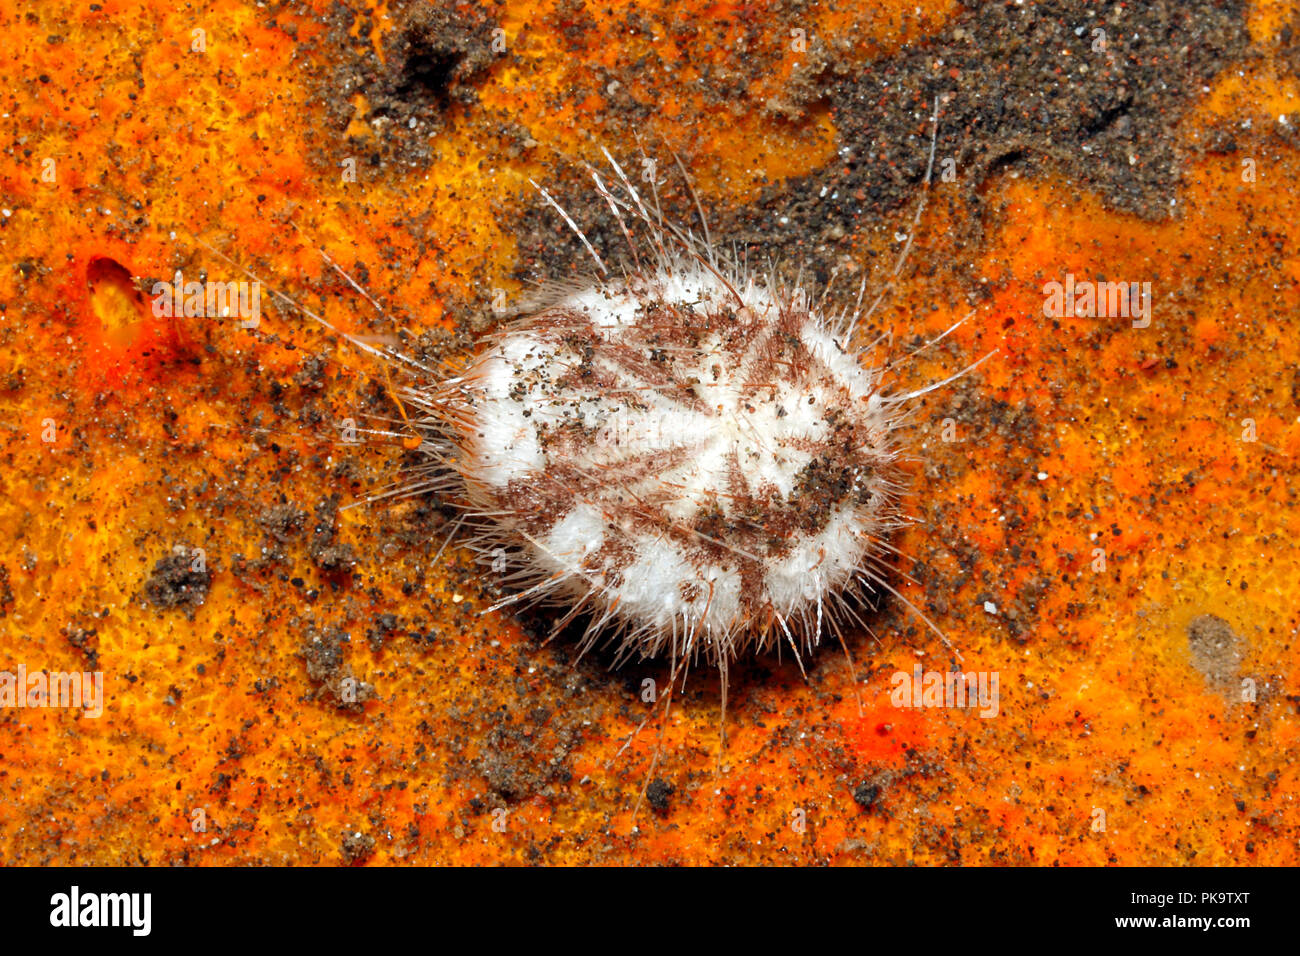 Longspine Heart Urchin, Maretia planulata. Also known as Hearth Heart Urchin. Tulamben, Bali, Indonesia. Bali Sea, Indian Ocean Stock Photo